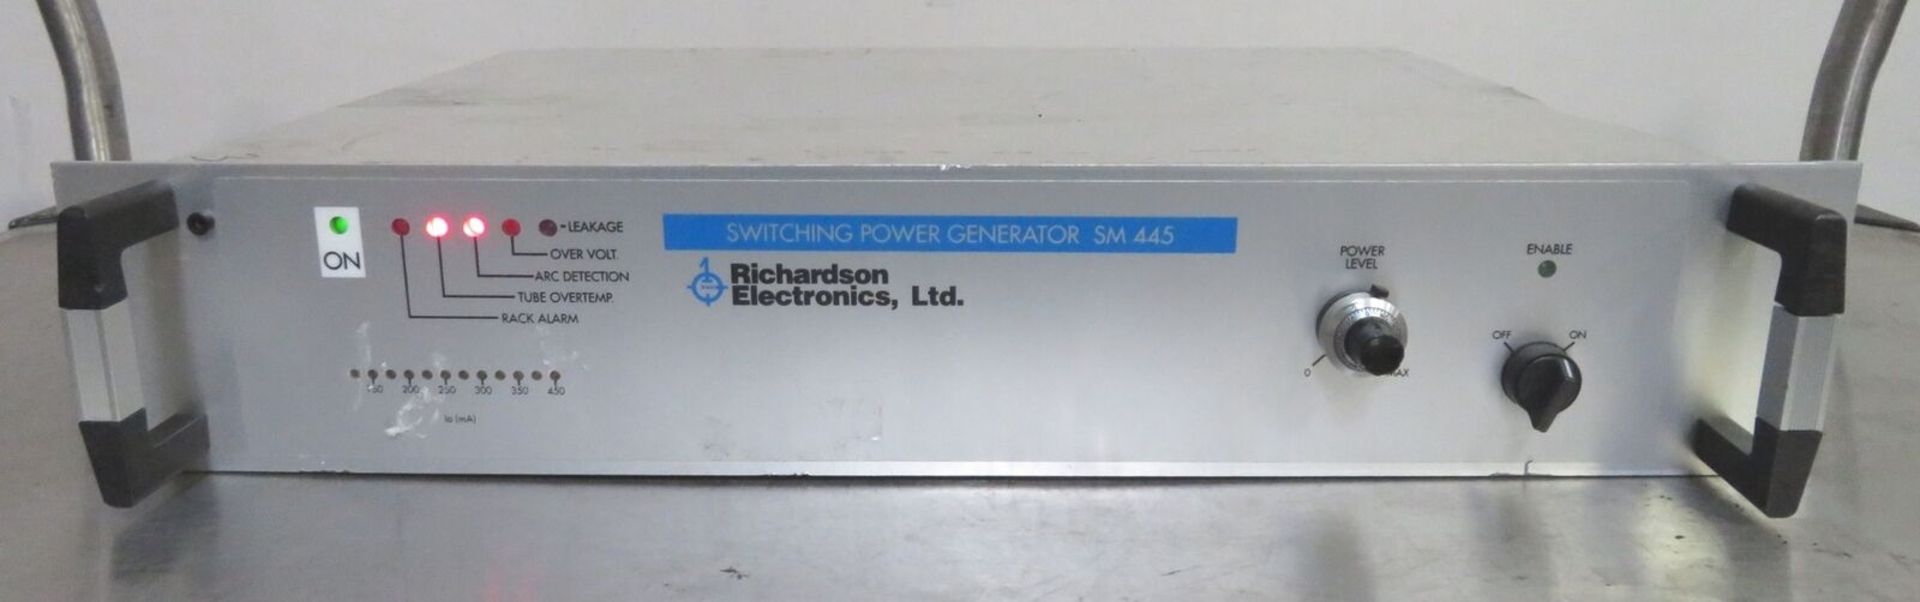 Richardson Electronics Alter SM445G.0001 Switching Power Generator 120kA - Gilroy